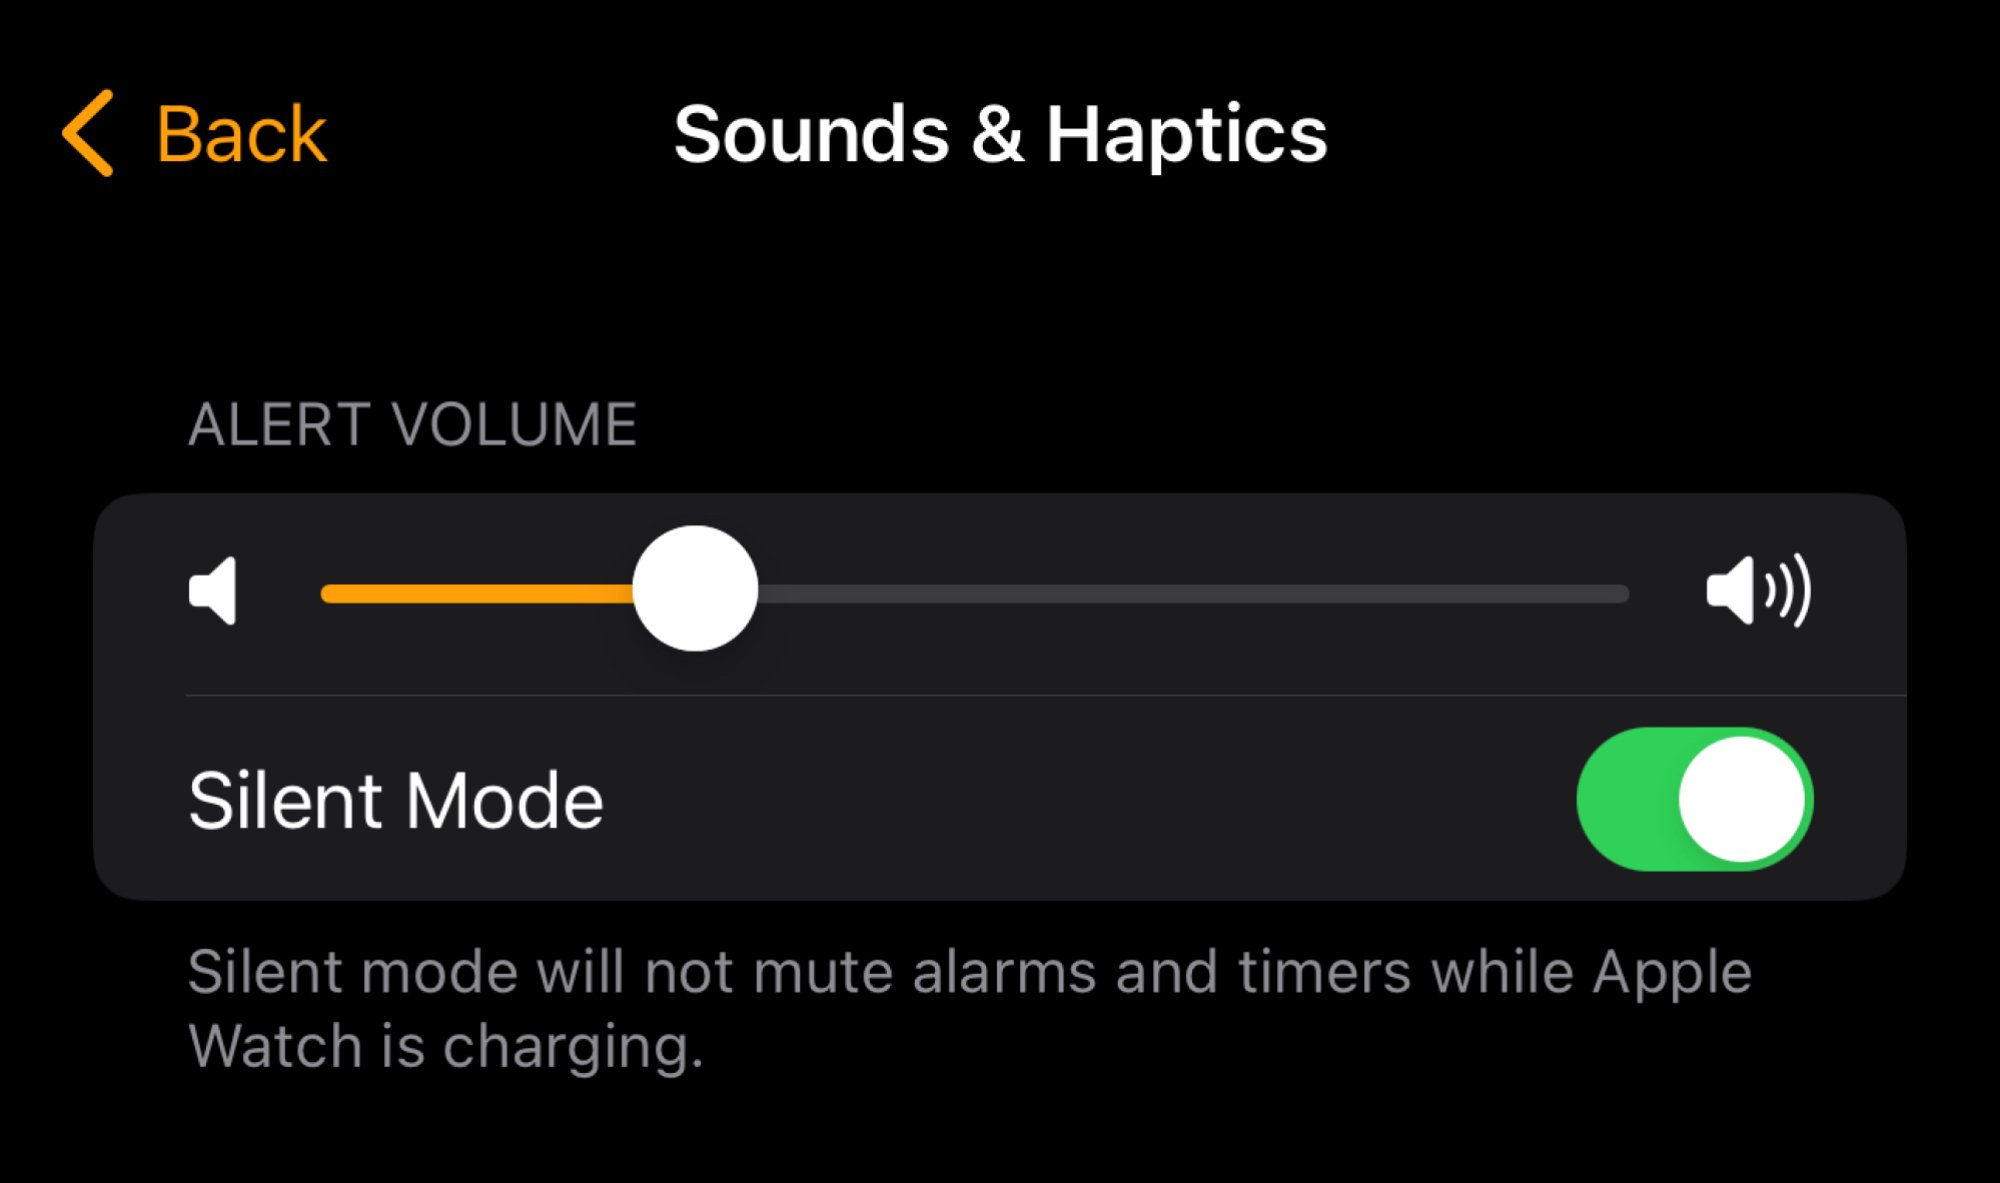 Sounds & haptics settings